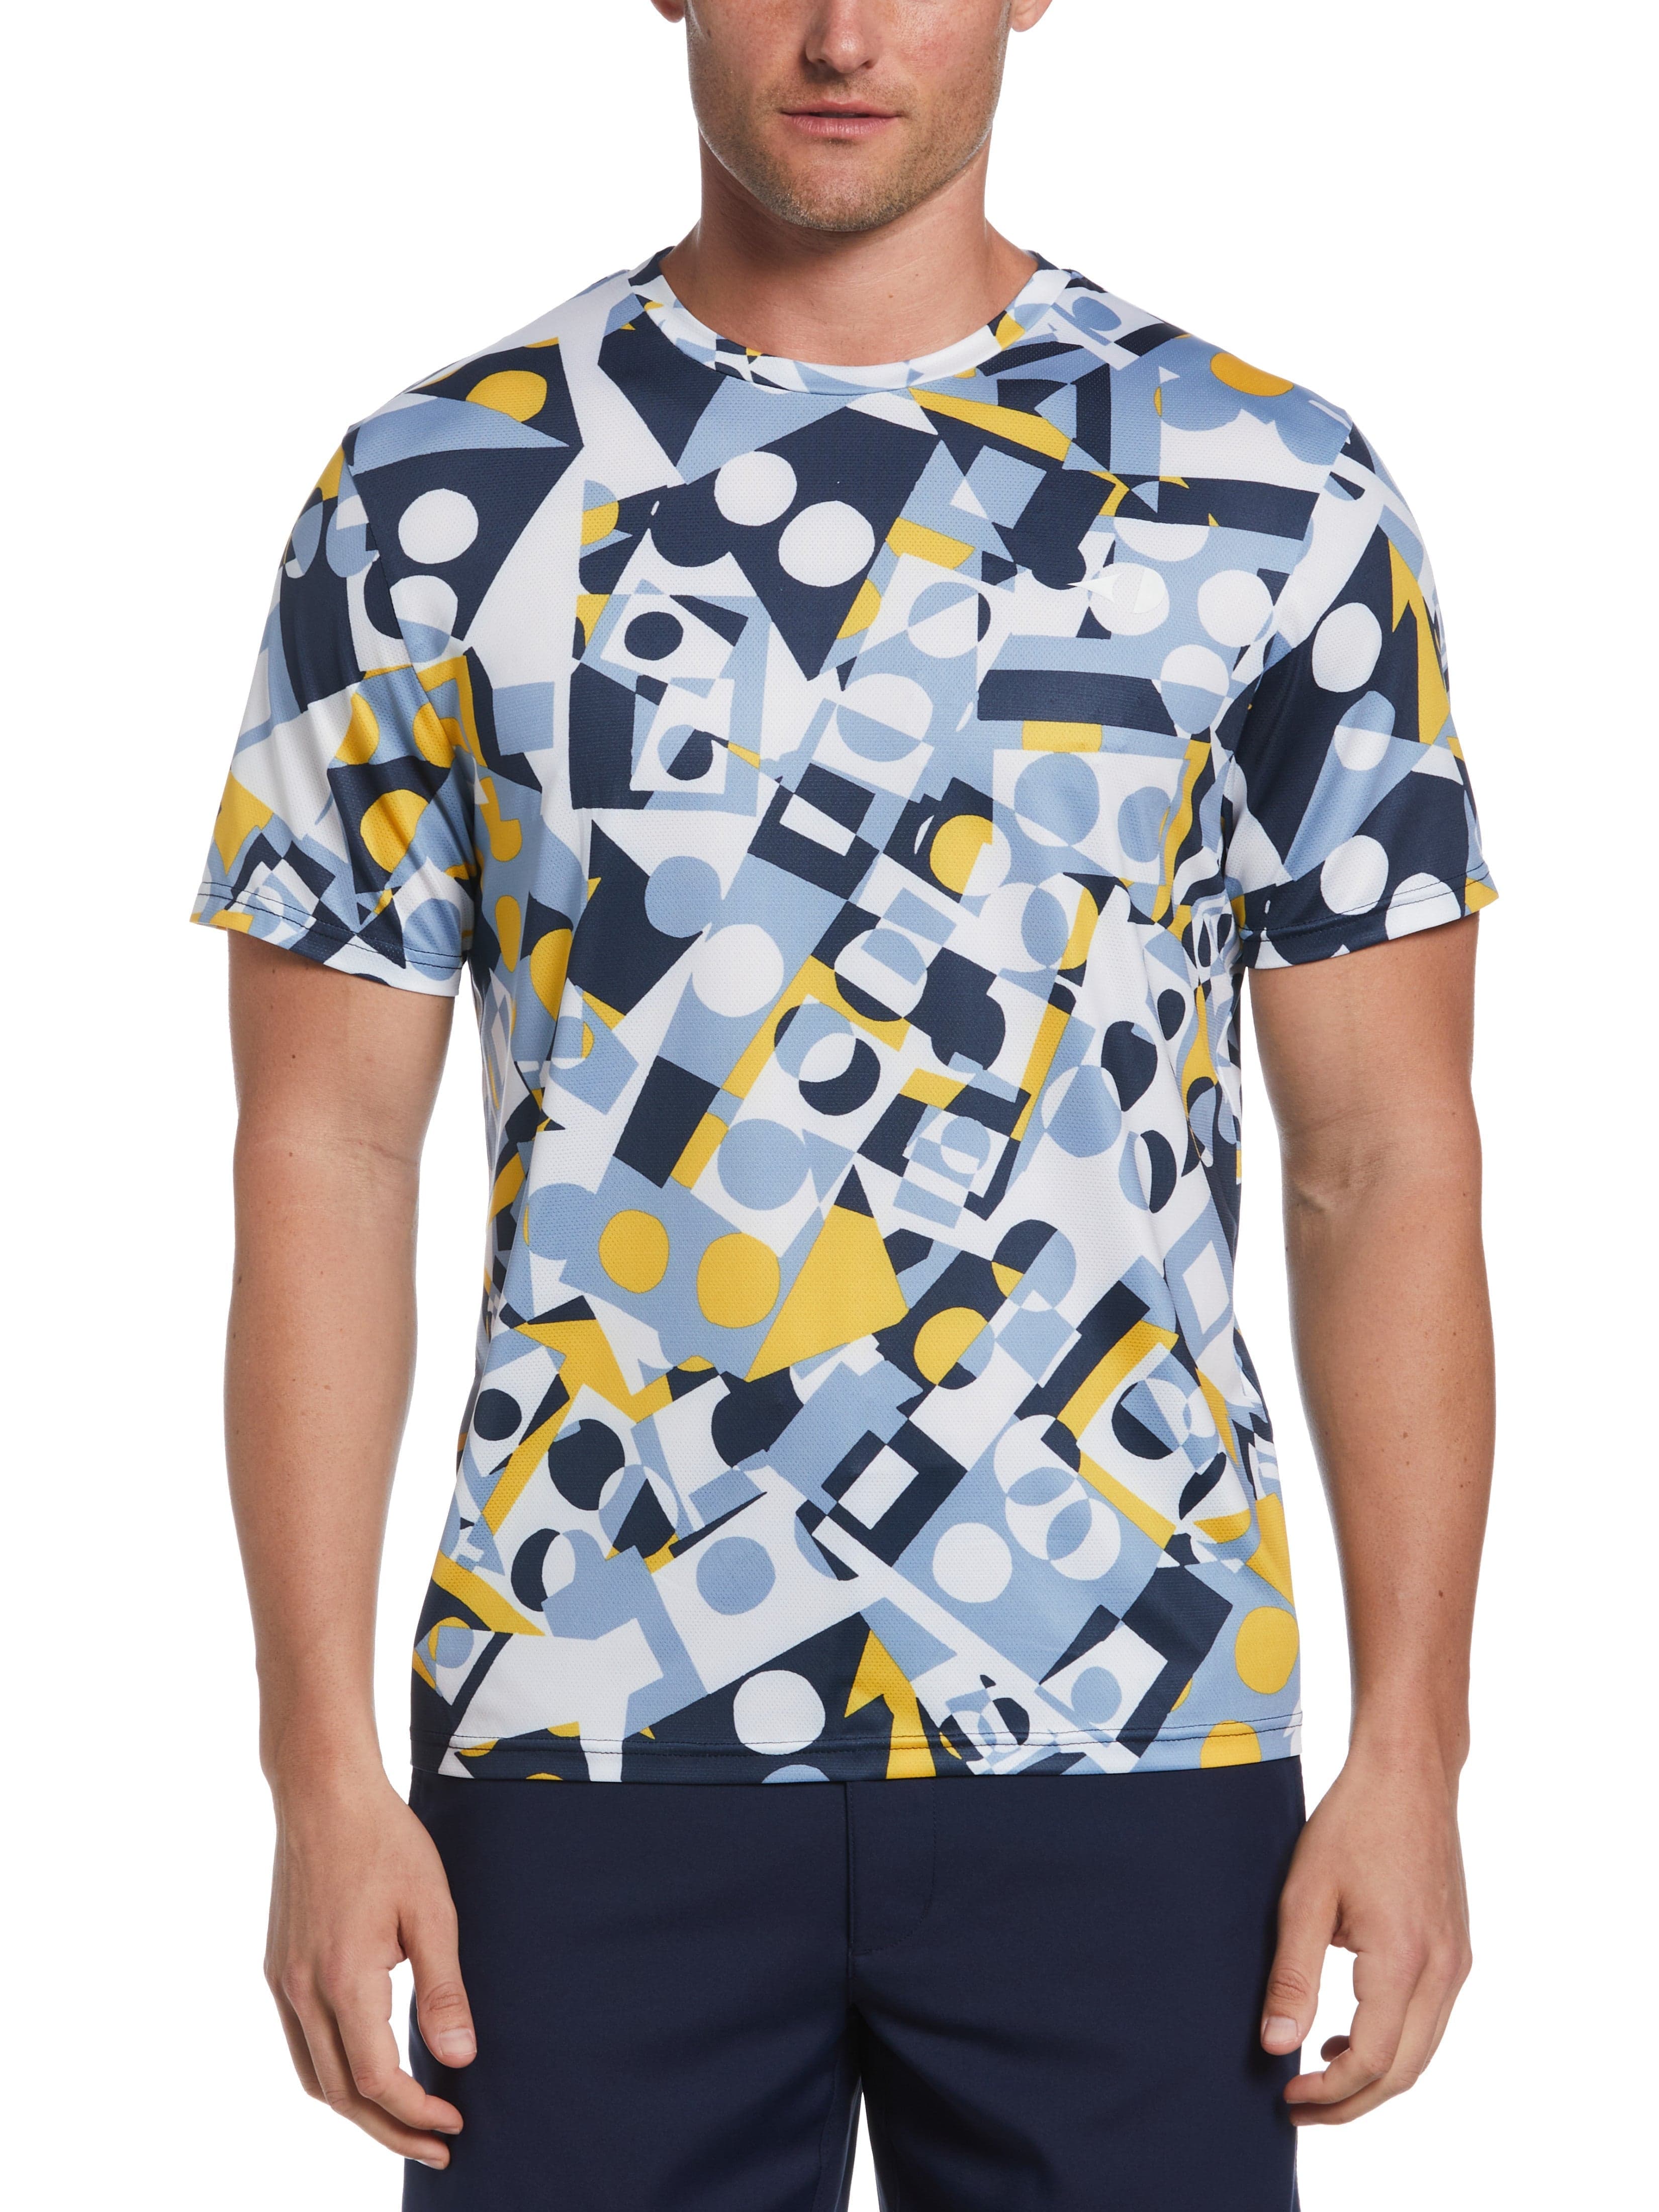 Grand Slam Mens Abstract Multi Geo Printed Crew Neck Tennis Shirt, Size XL, Navy Blue, Polyester/Spandex | Golf Apparel Shop